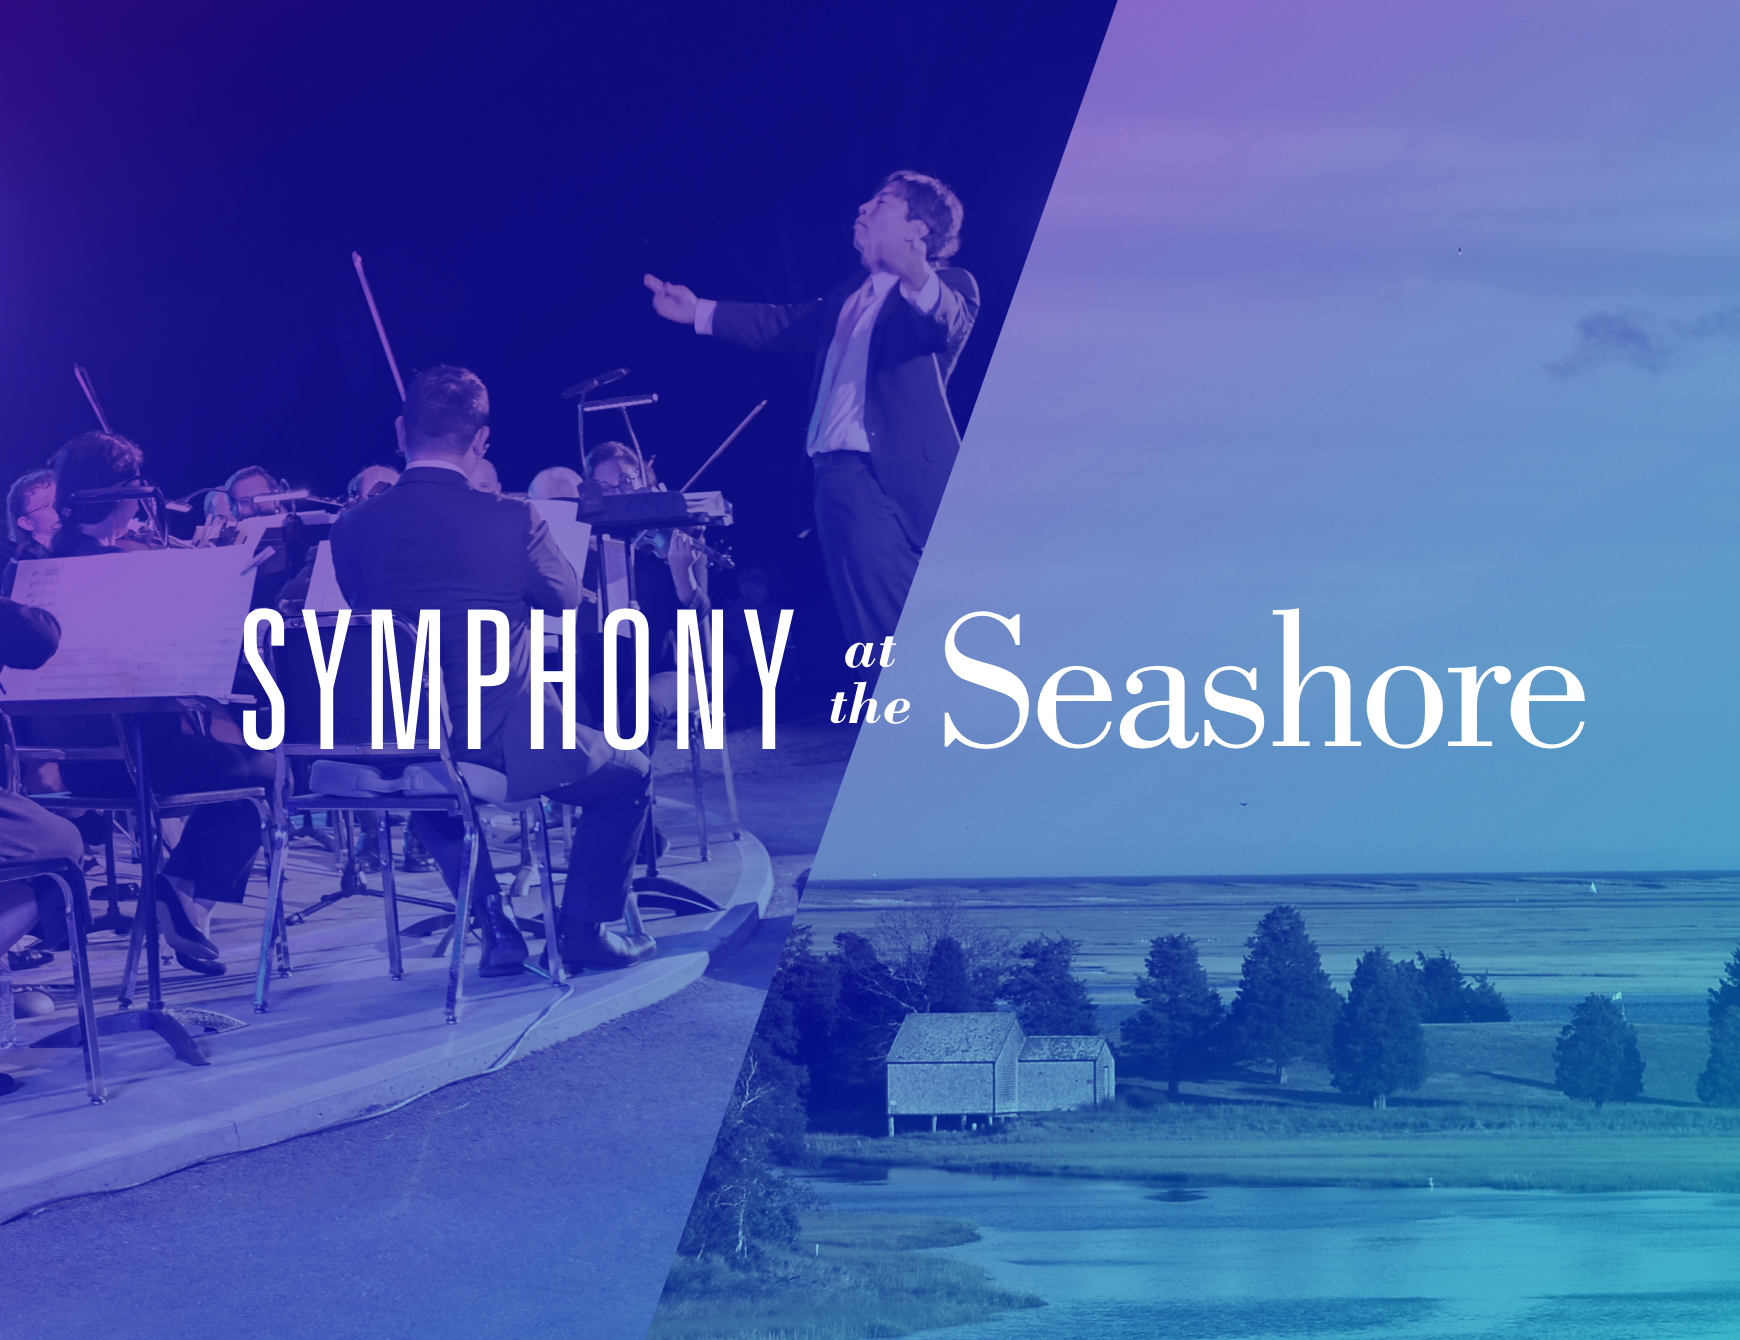 Symphony at the Seashore